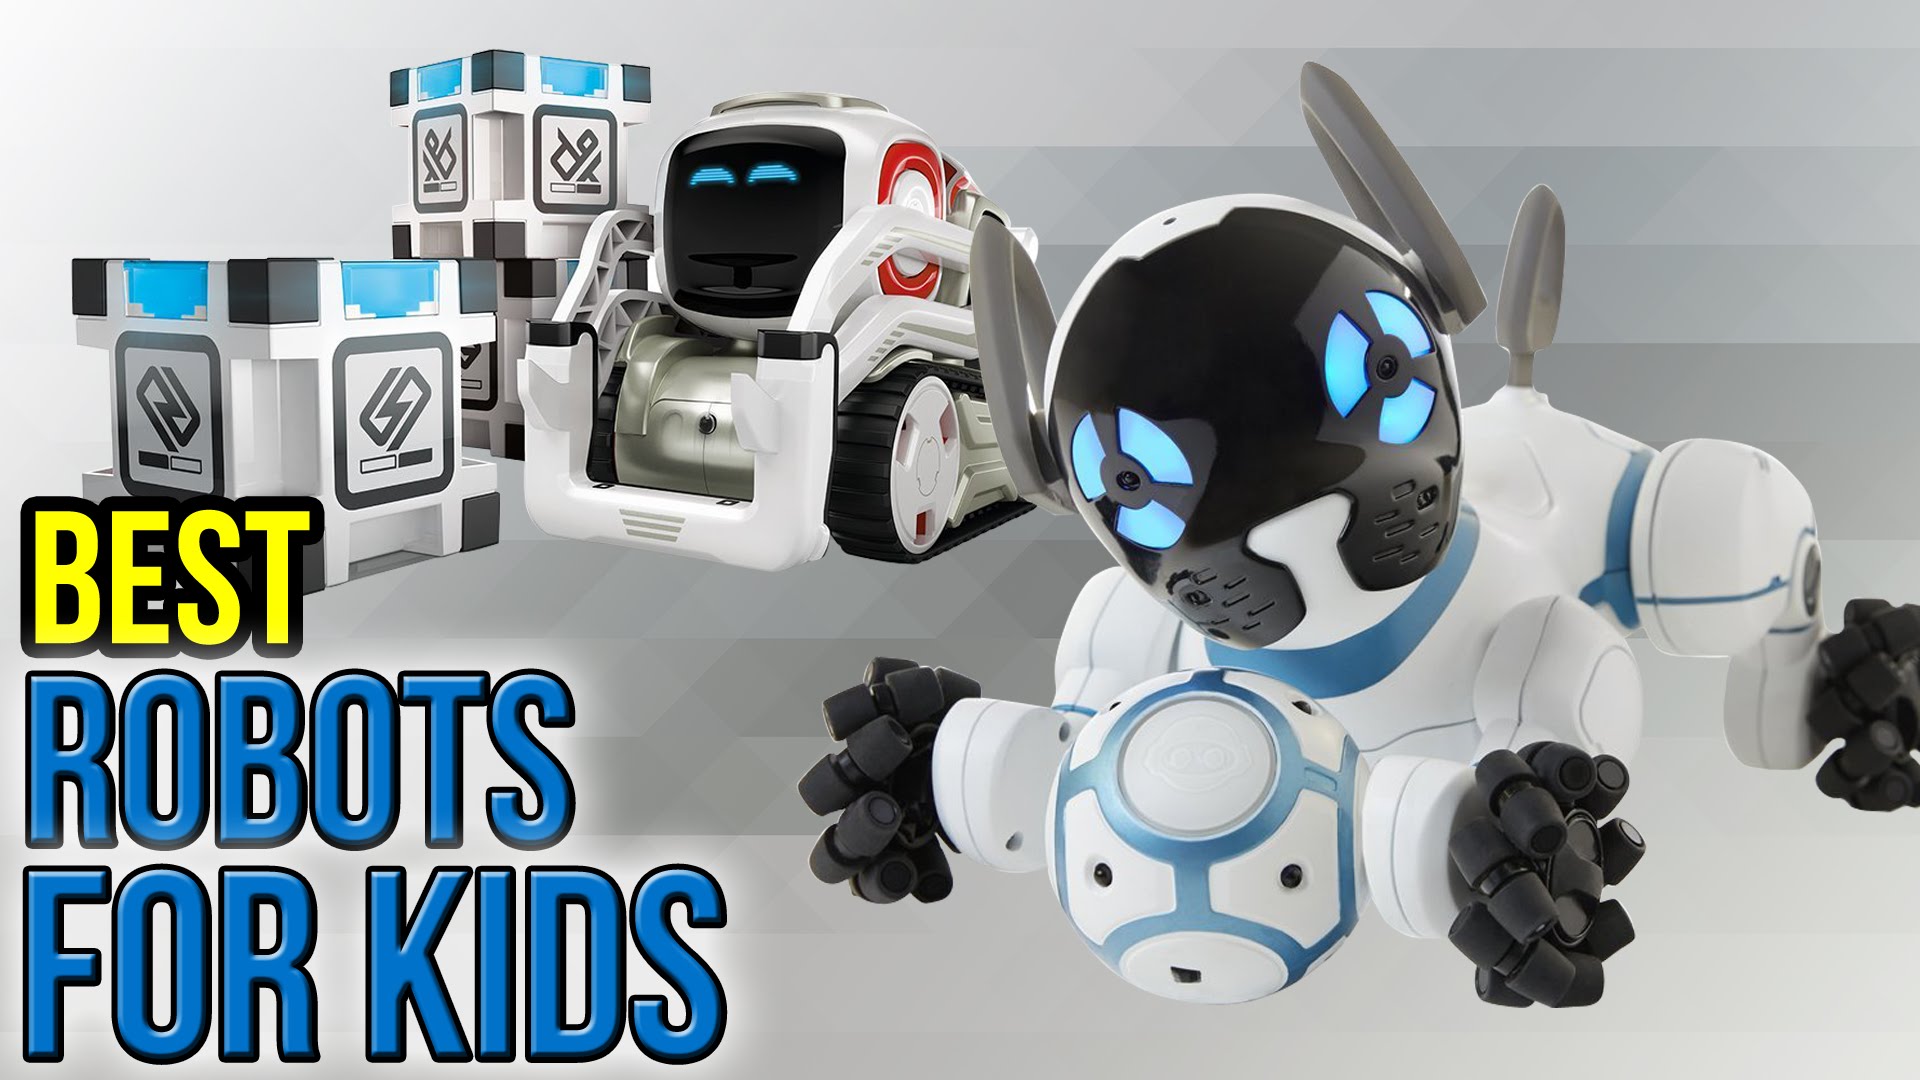 10 Best Robots For Kids 2017 - YouTube